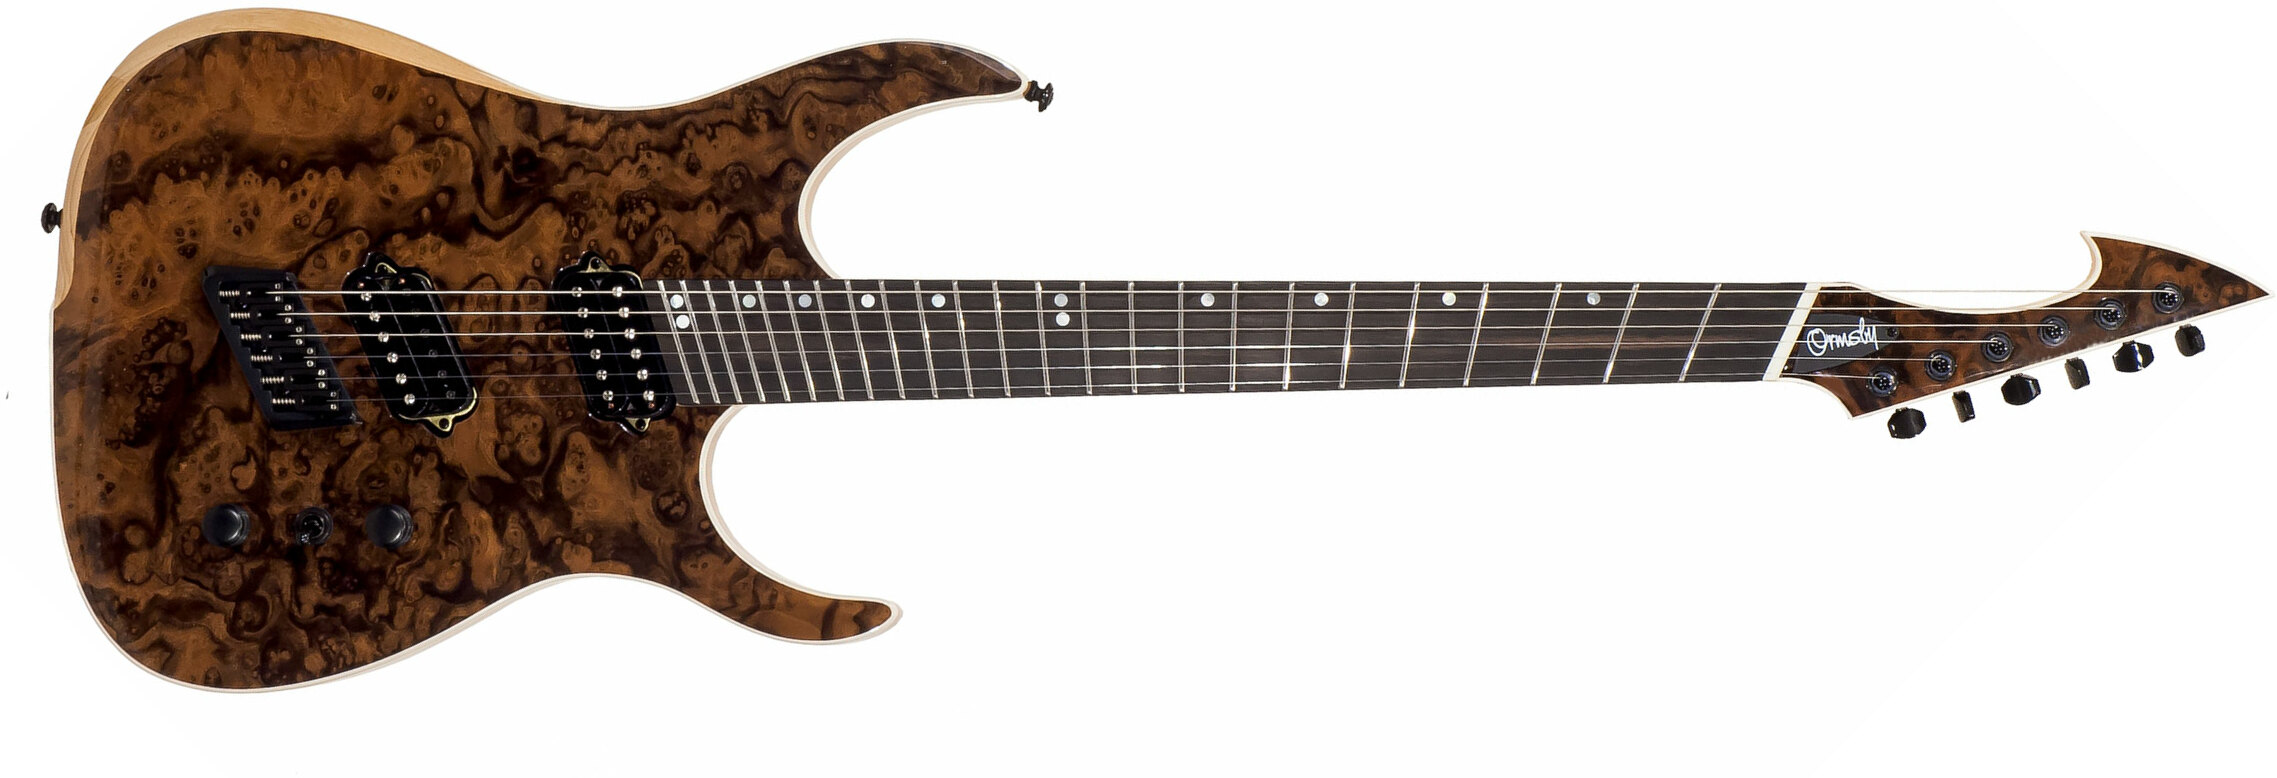 Ormsby Hype Gtr 6 Swamp Ash Walnut Burl Hh Ht Eb - Natural - Multi-Scale Guitar - Main picture